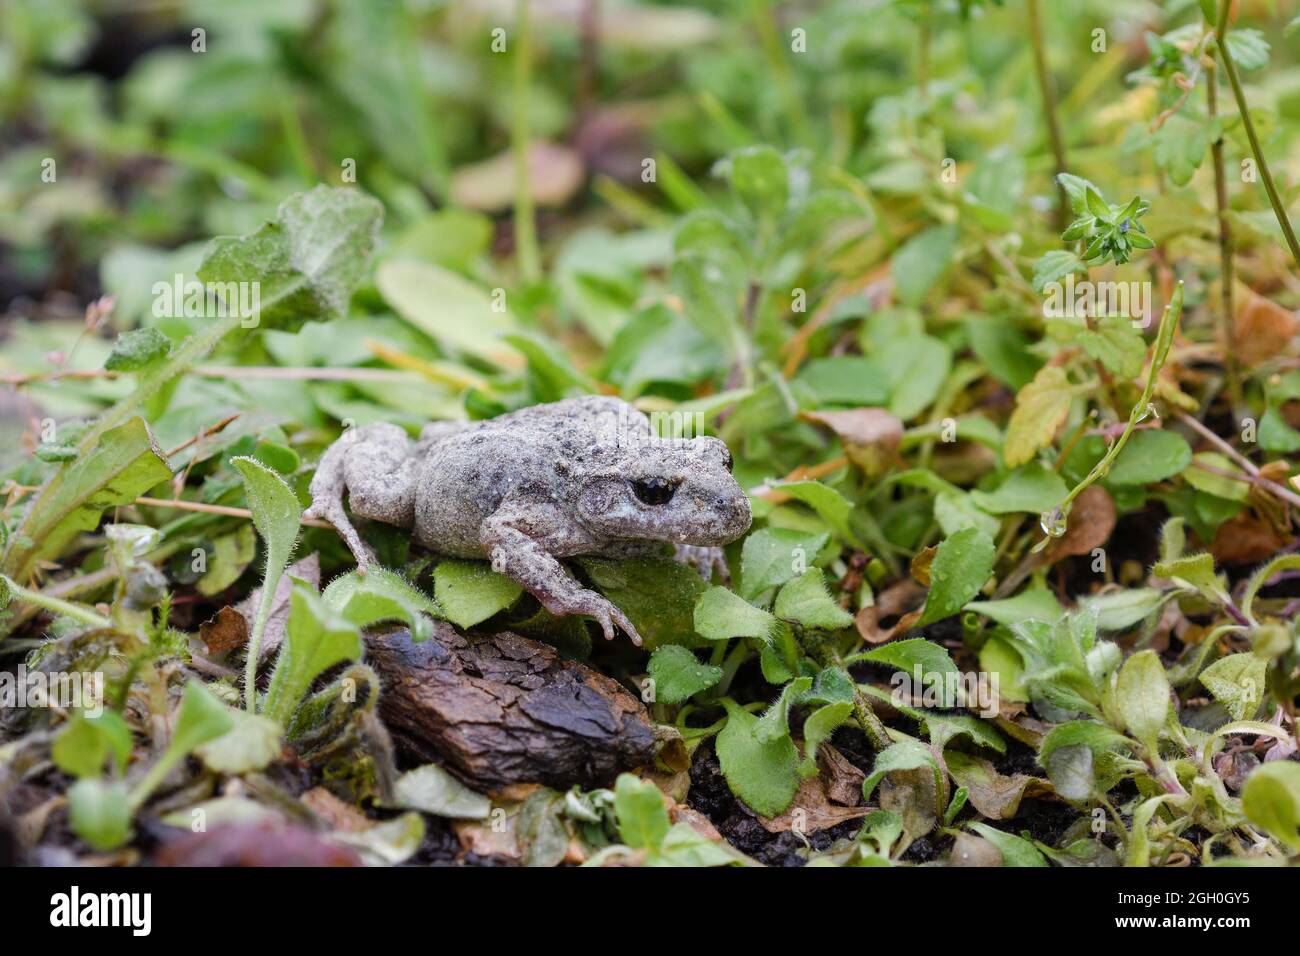 toad among the vegetation Stock Photo